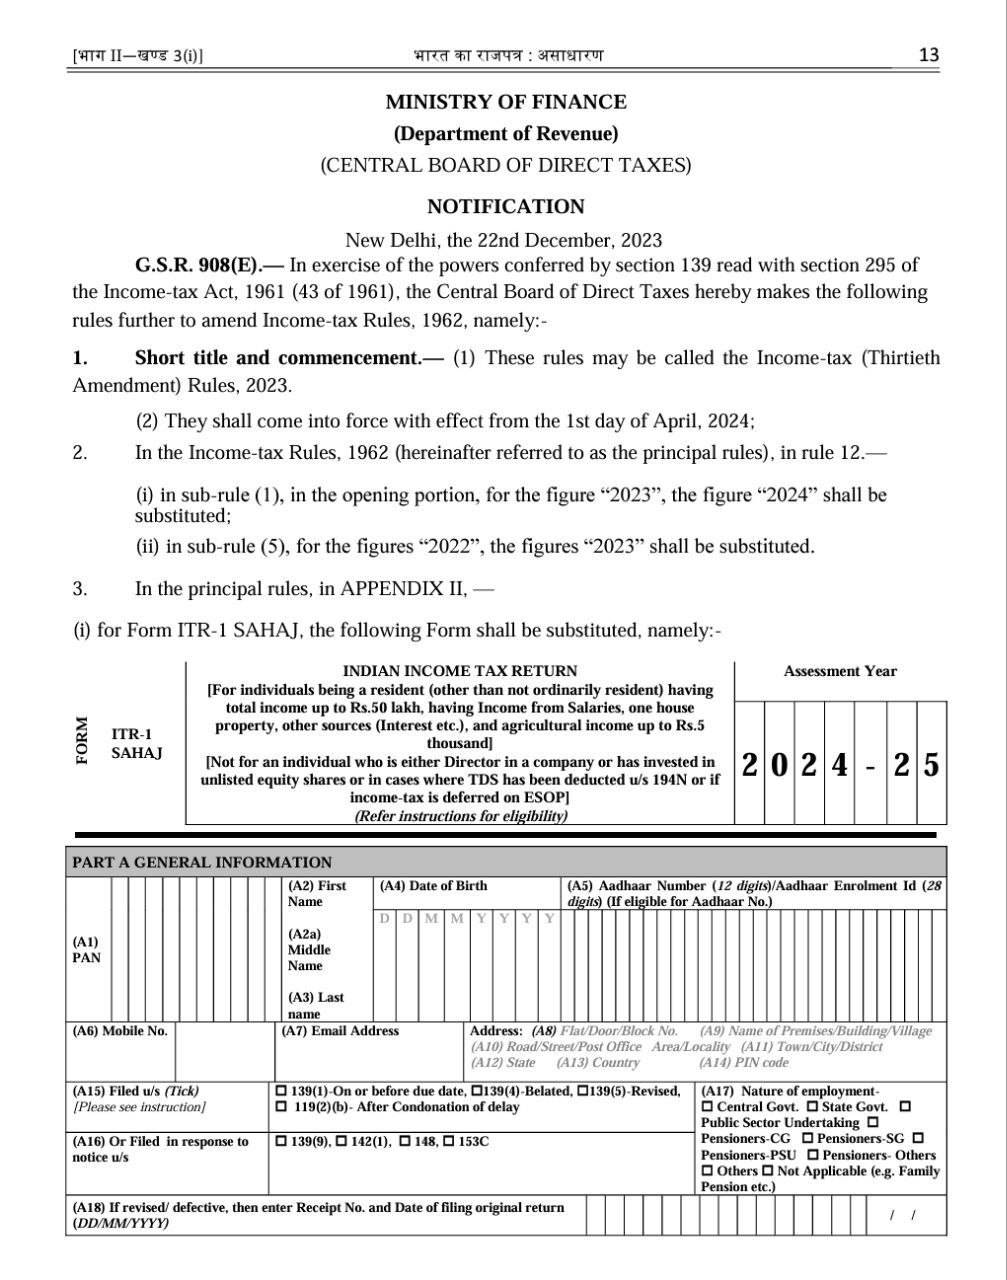 Tax Return Form ITR 1 & ITR 4 notified for AY 202425